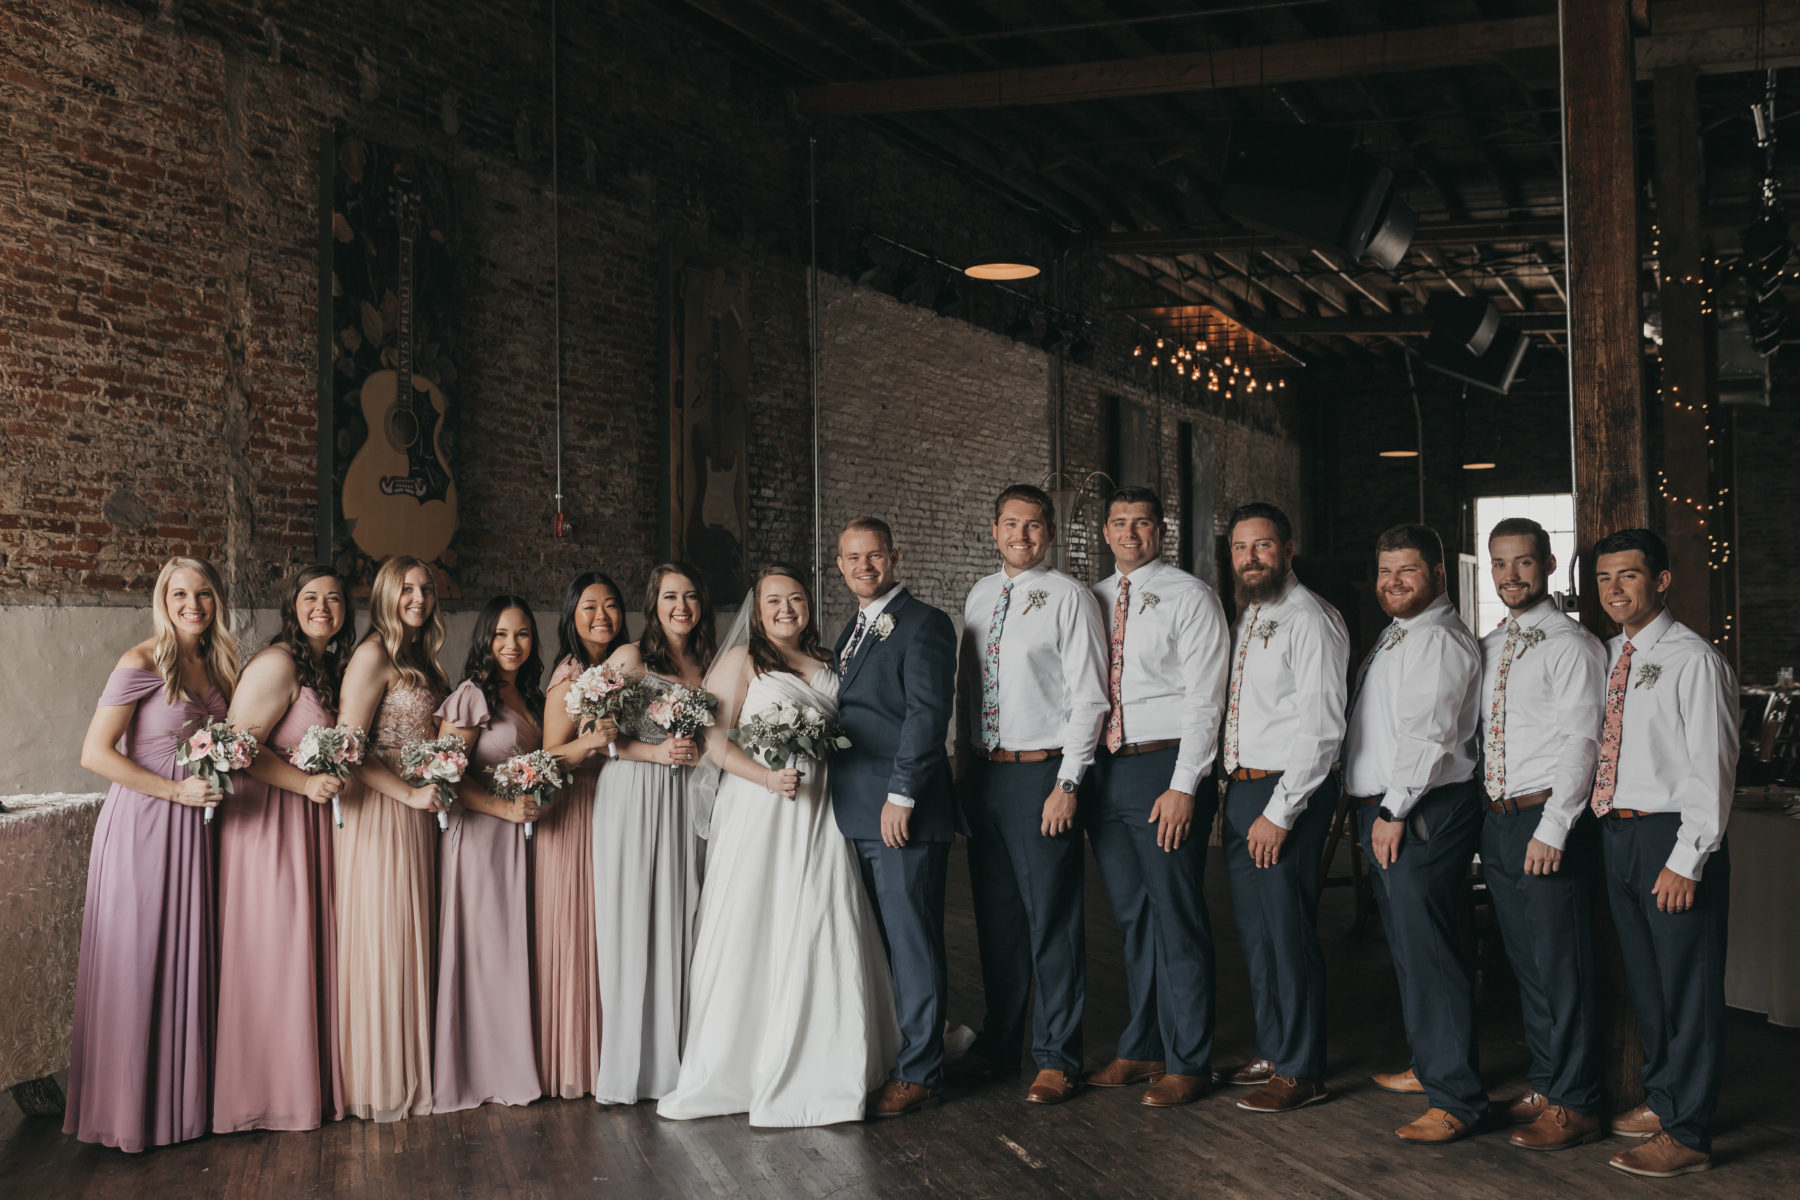 Meet Nashville wedding venue Guitar & Cadillac featured on Nashville Bride Guide